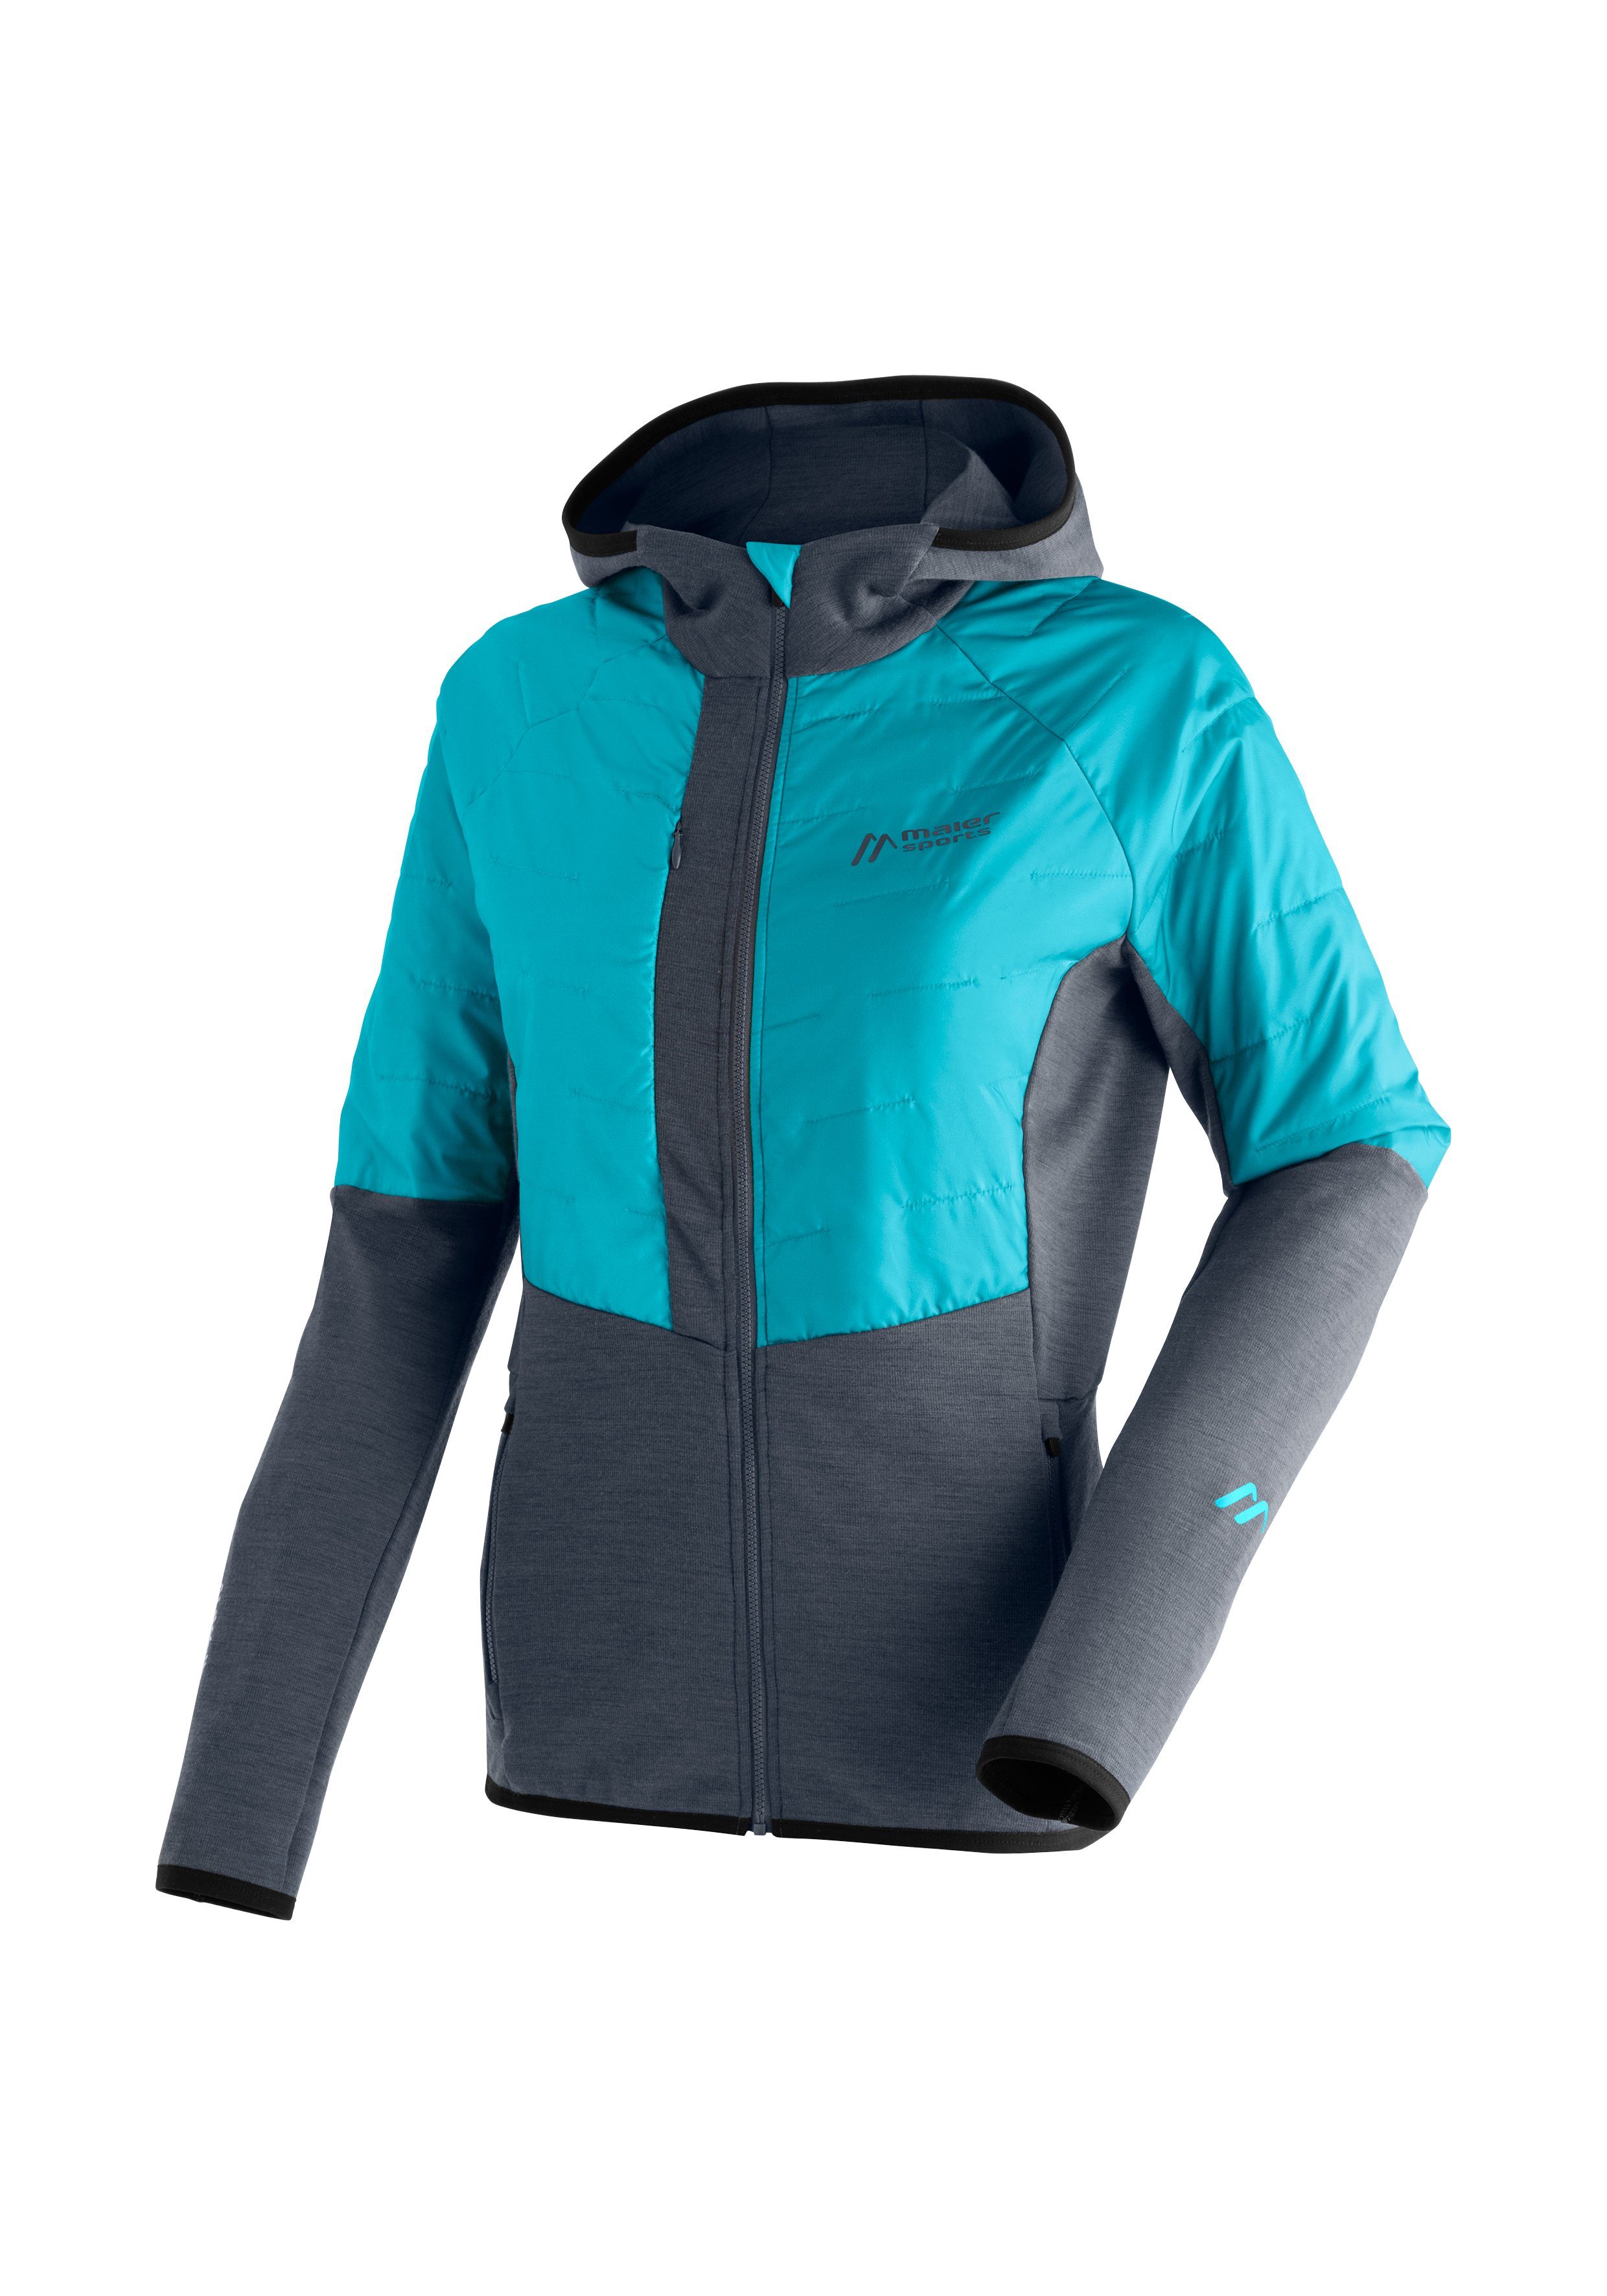 Maier Sports Outdoorjacke Lanus W Damen Wanderjacke wattiert, atmungsaktive Trekking-Jacke mit 3 Taschen graublau